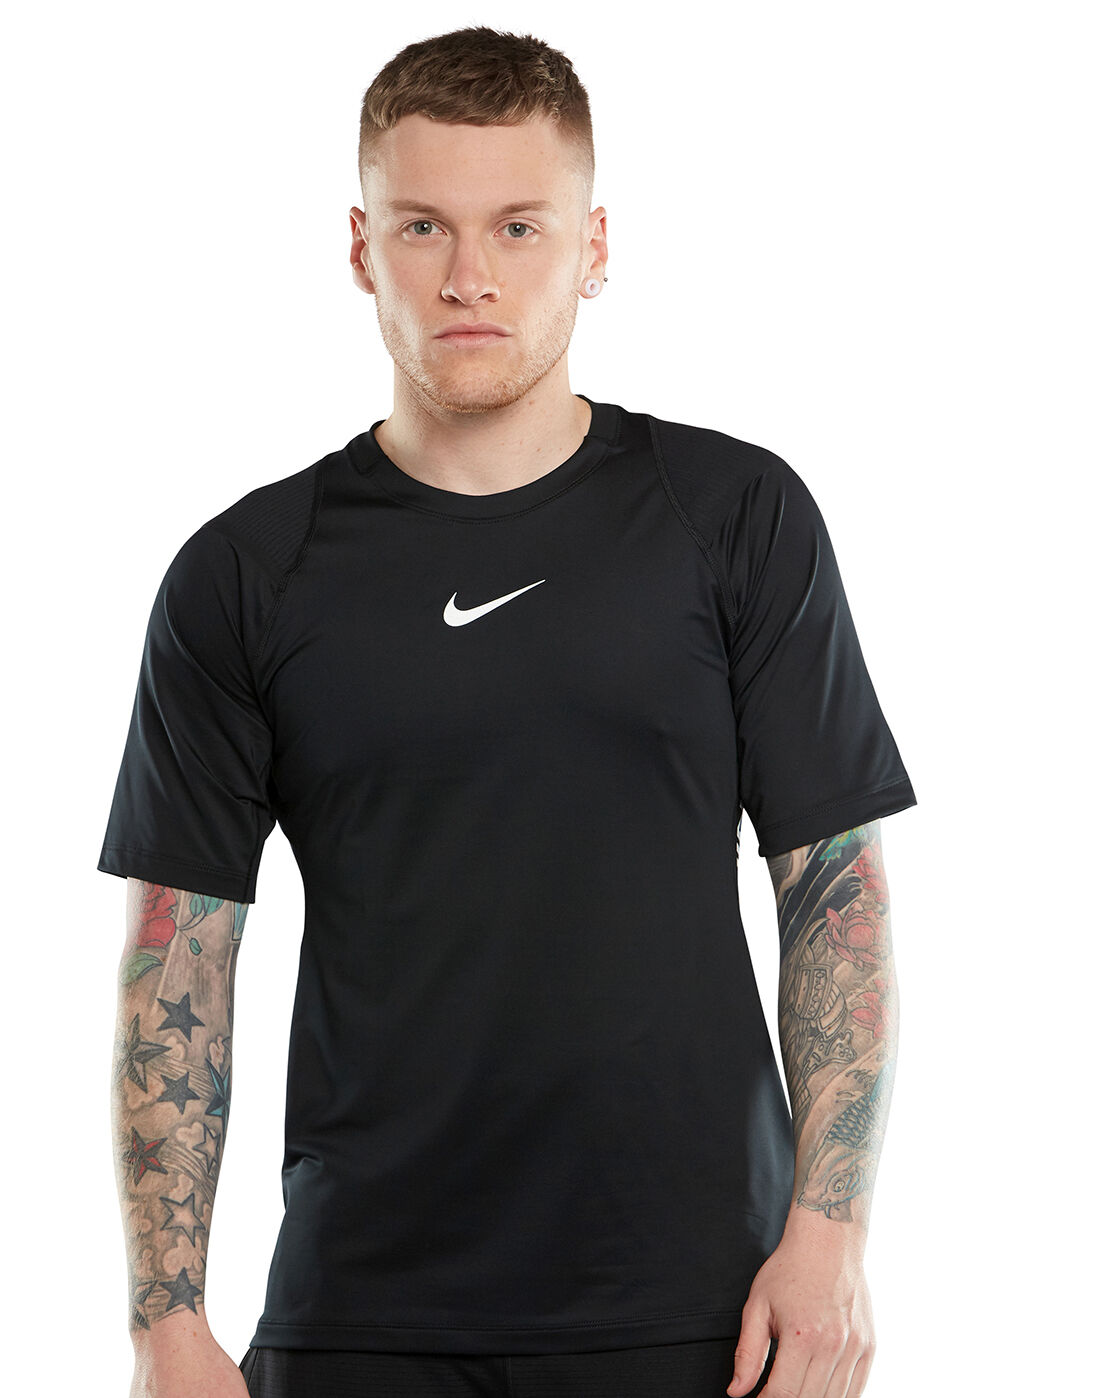 Nike Mens Pro Aeroadapt T-Shirt - Black 